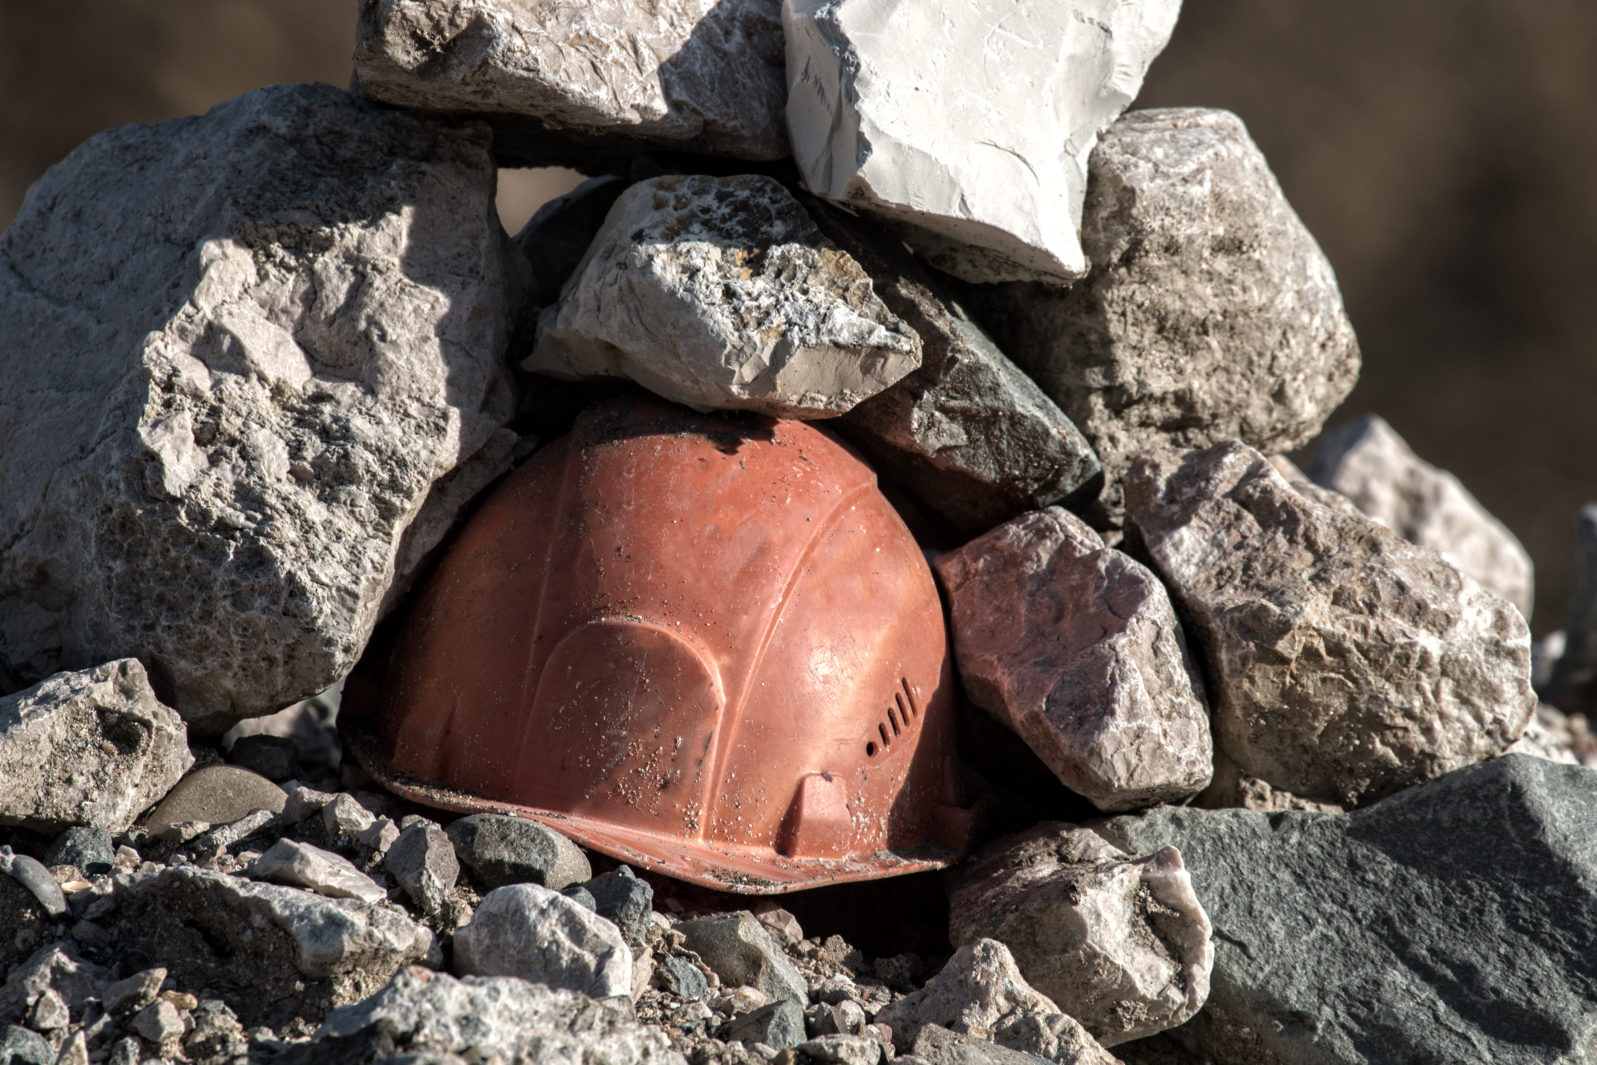 Working helmet on a pile of stones